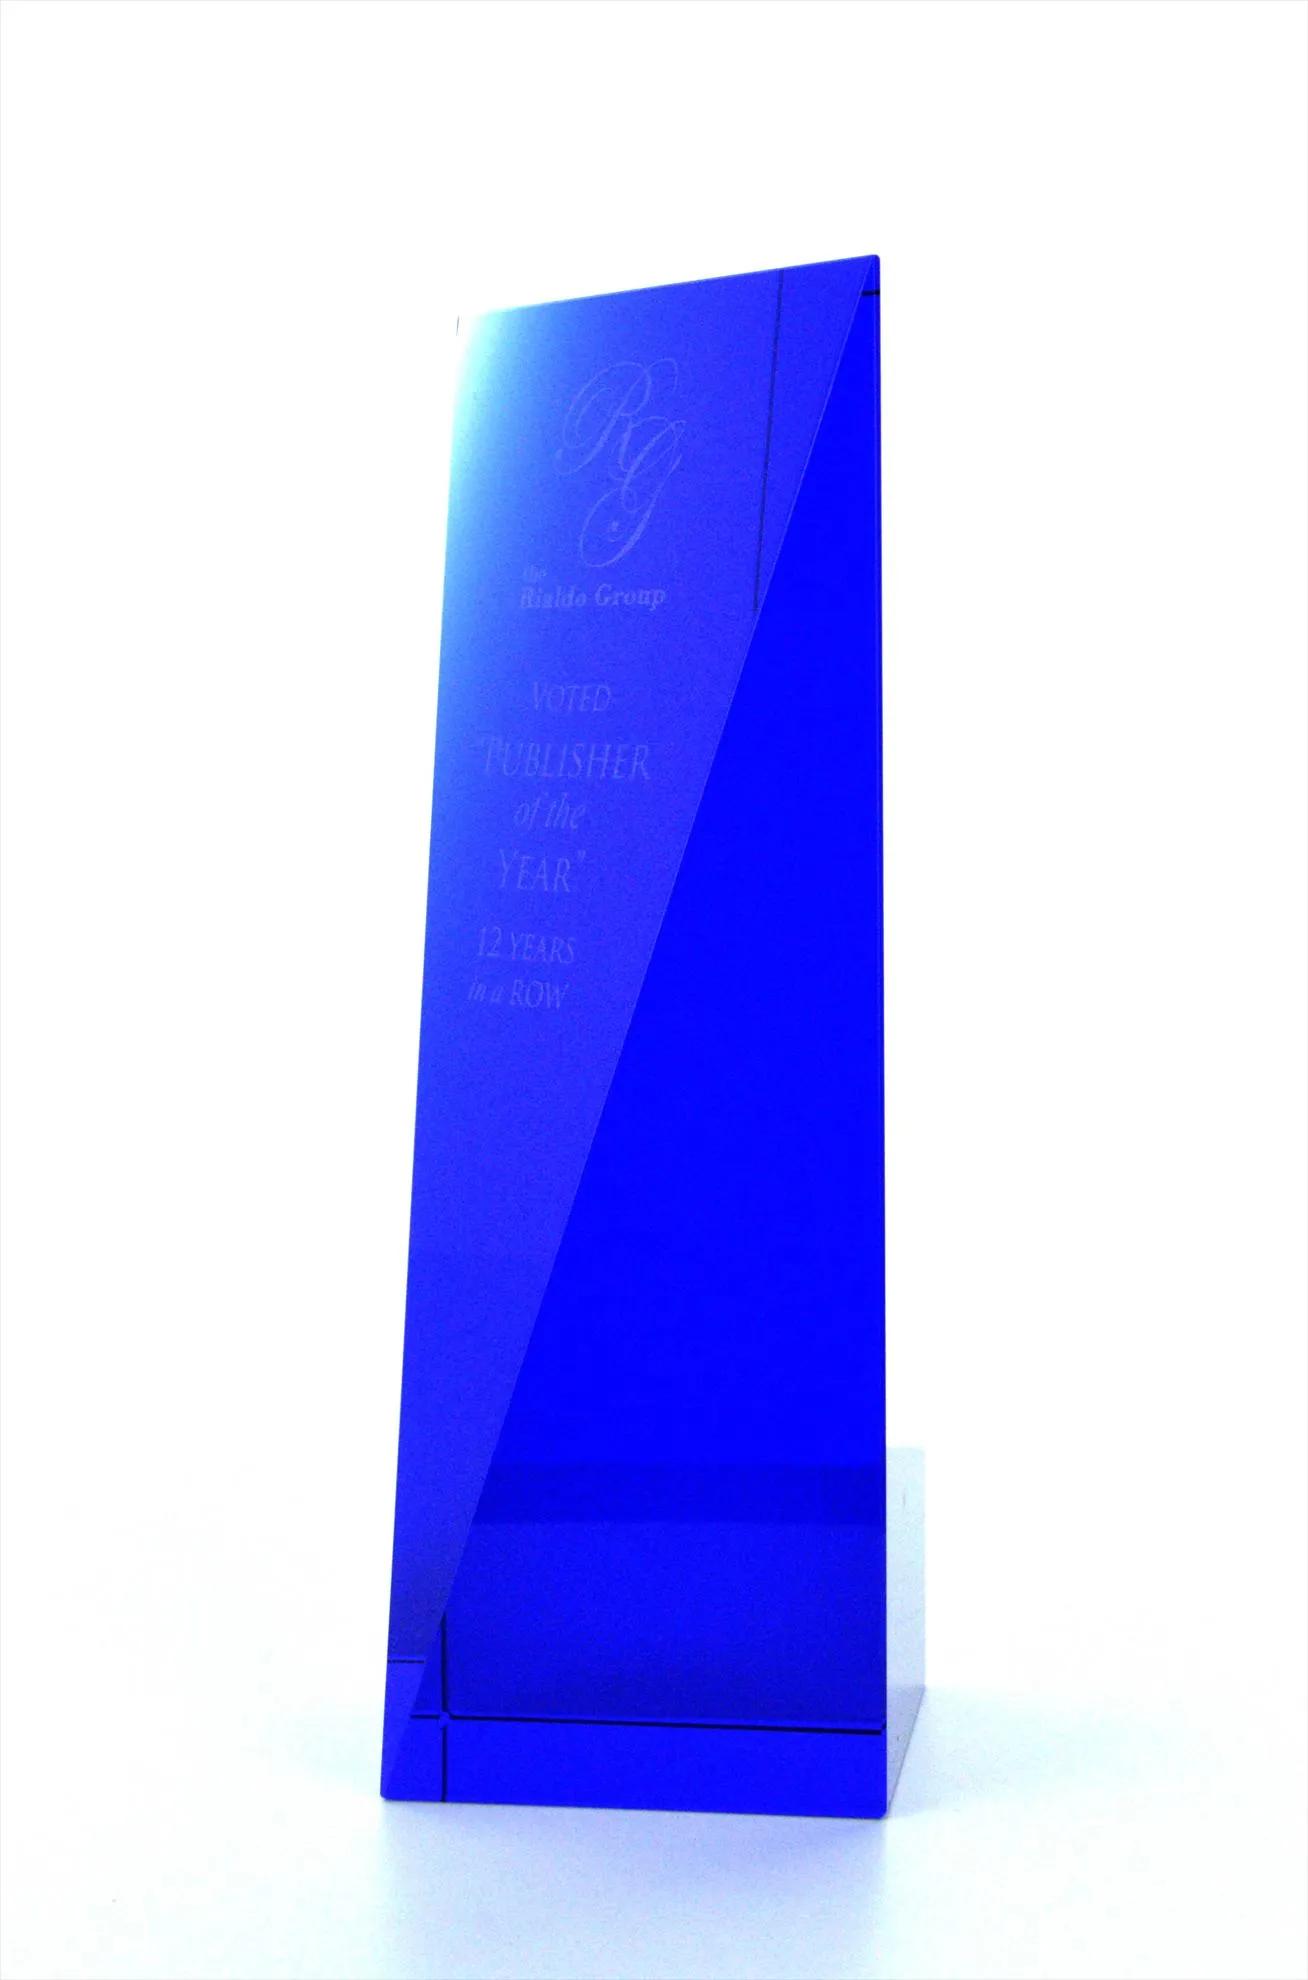 Atria Award - Medium 13 of 49